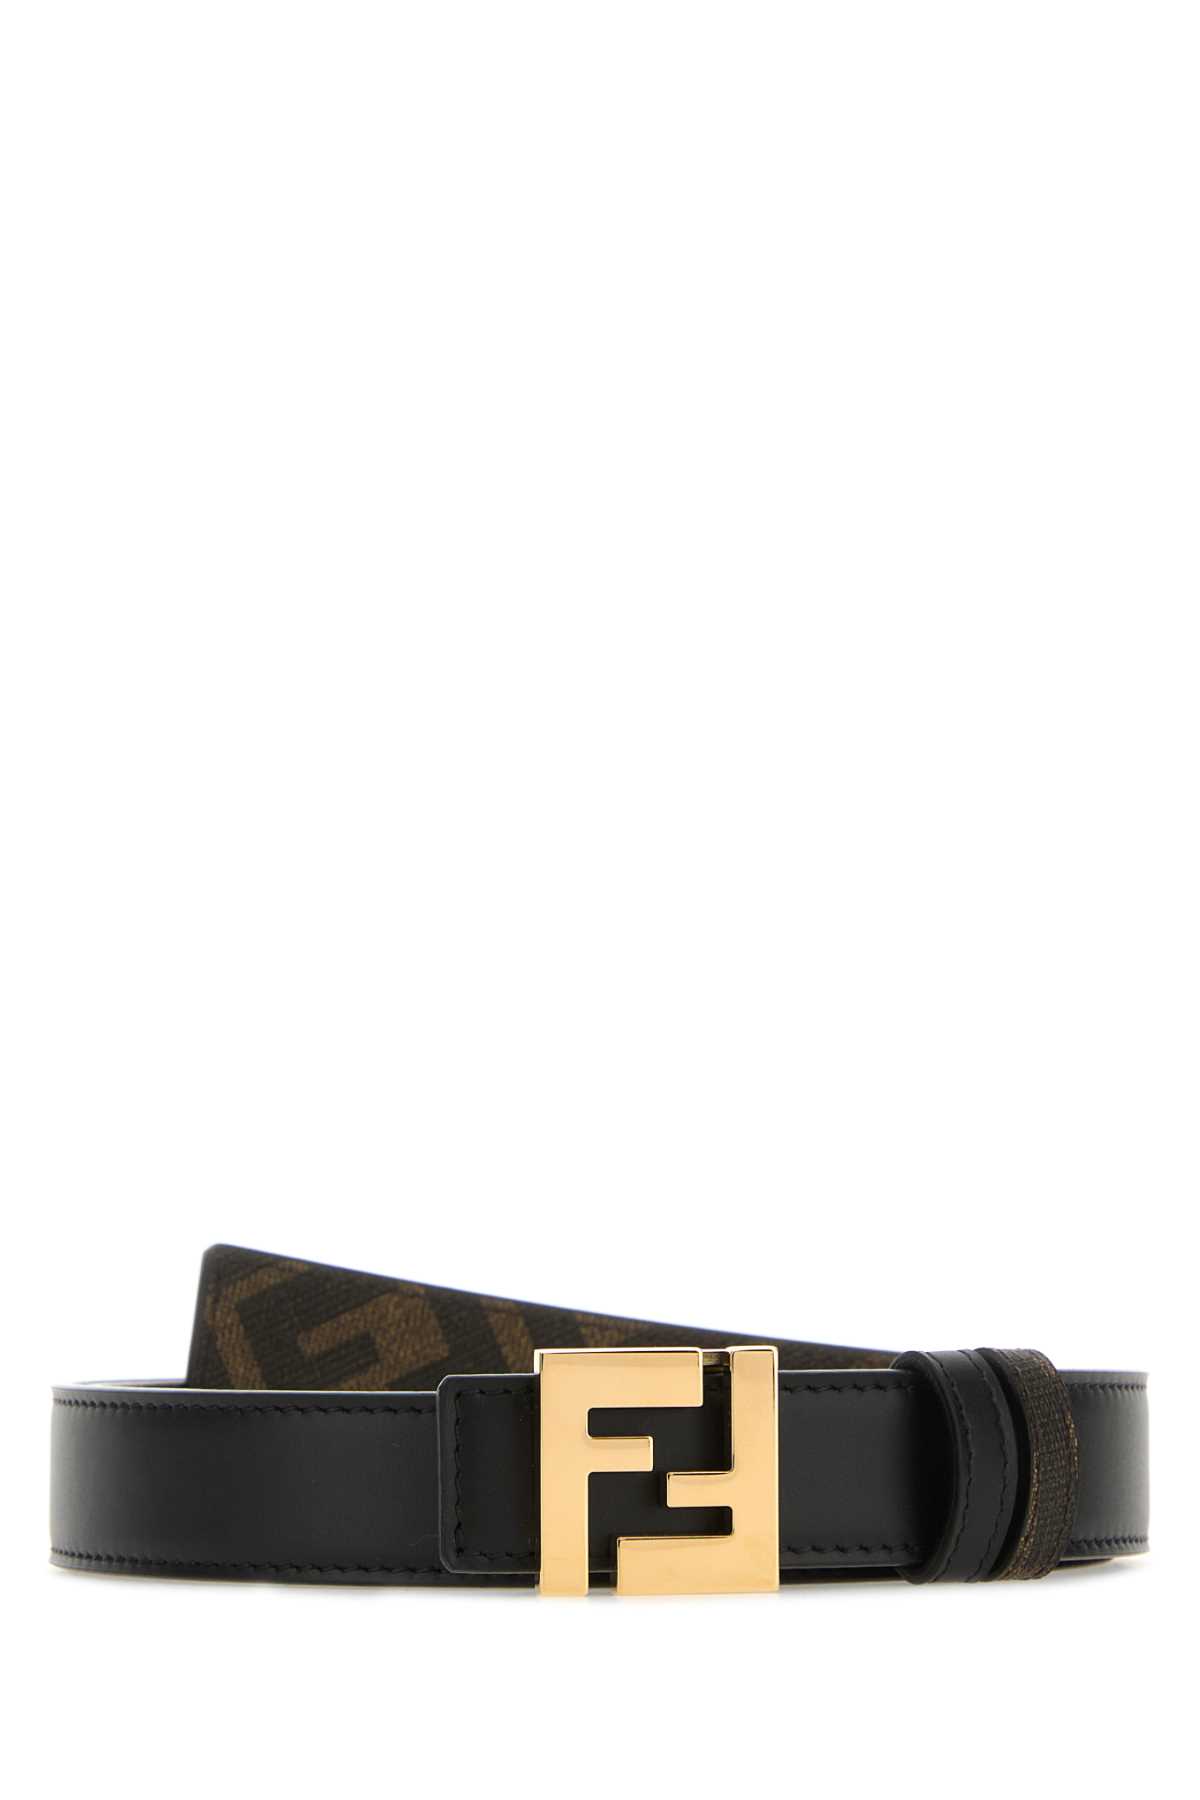 Fendi Black Leather Ff Squared Reversible Belt In Blutabacco